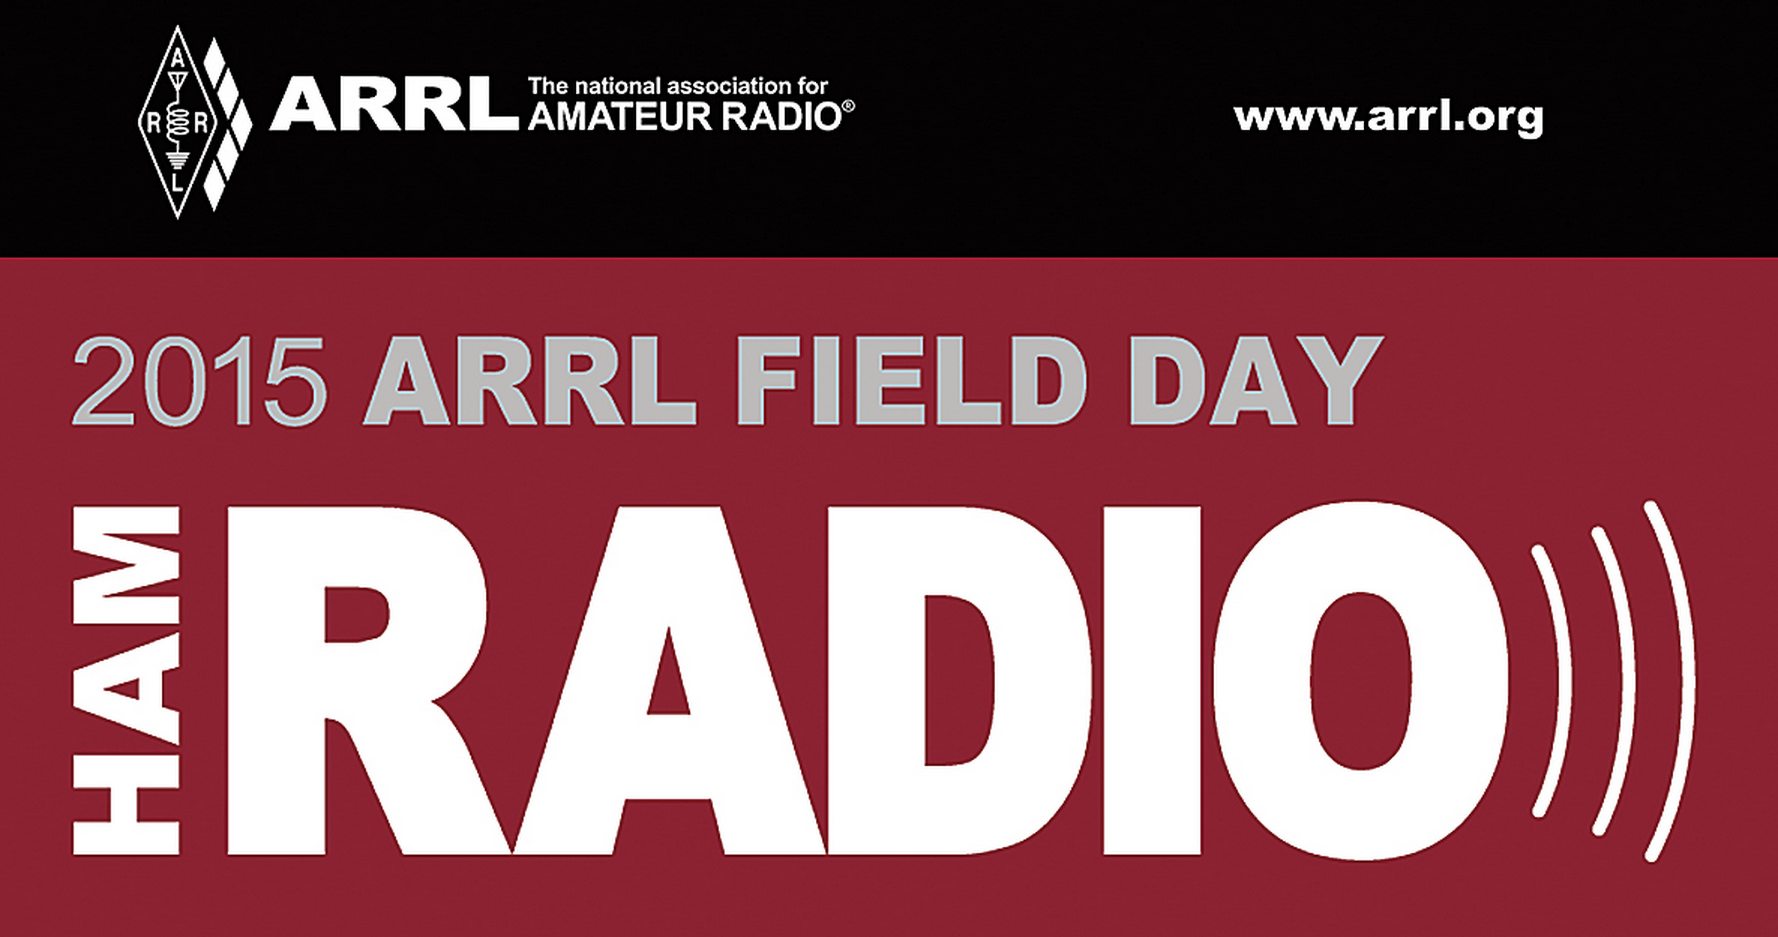 ARRL Logo - ARRL FIELD DAY JUNE 27 28 AT HAINS POINT